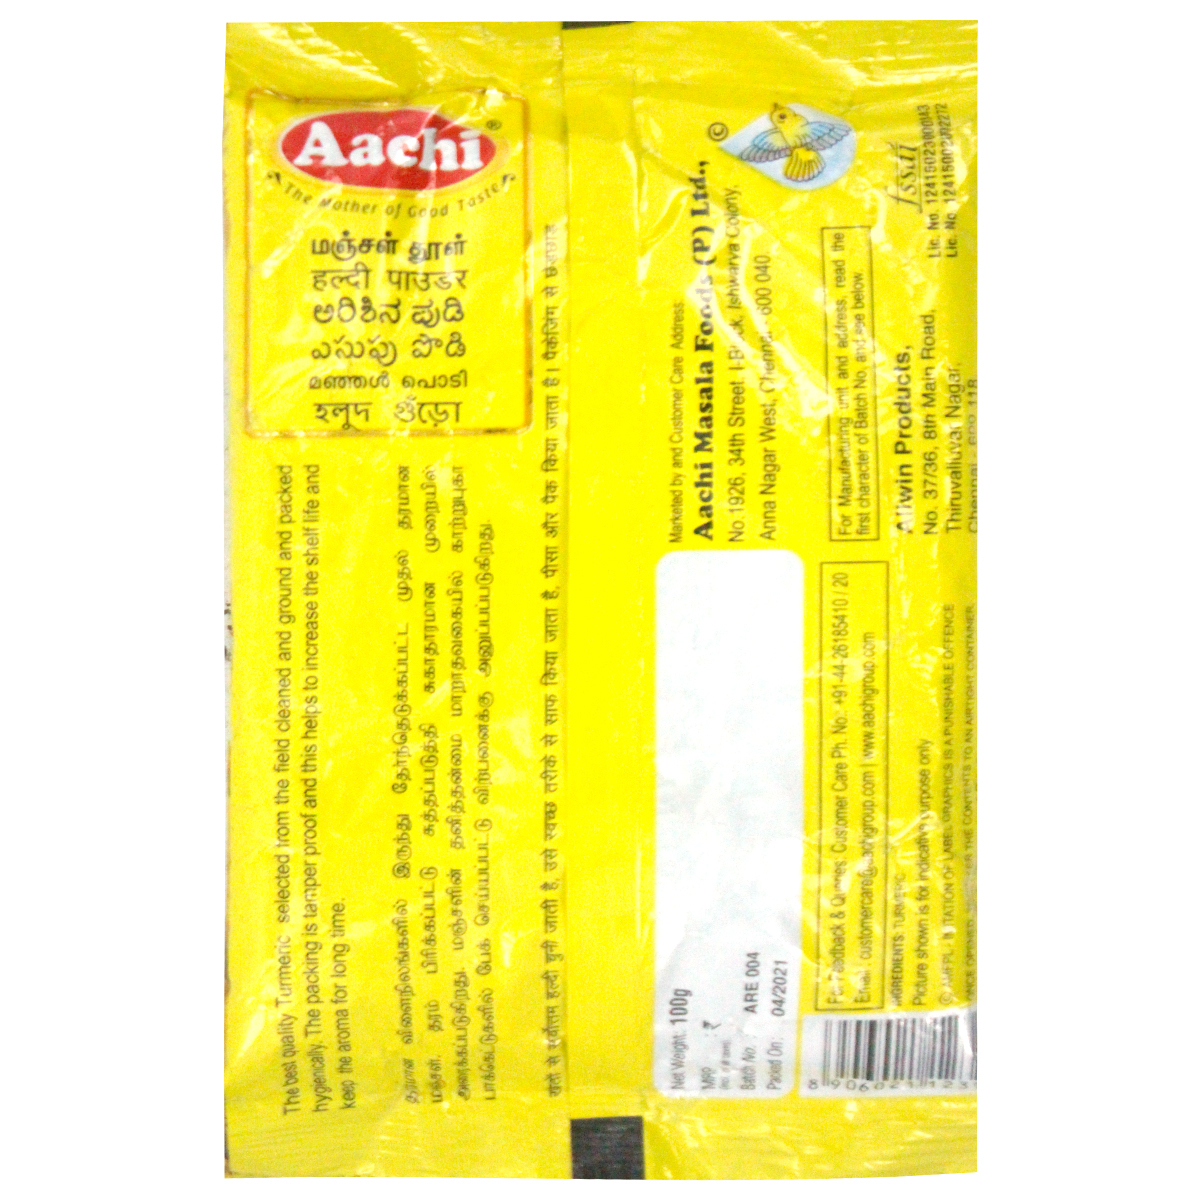 Aachi Turmeric Powder 100g